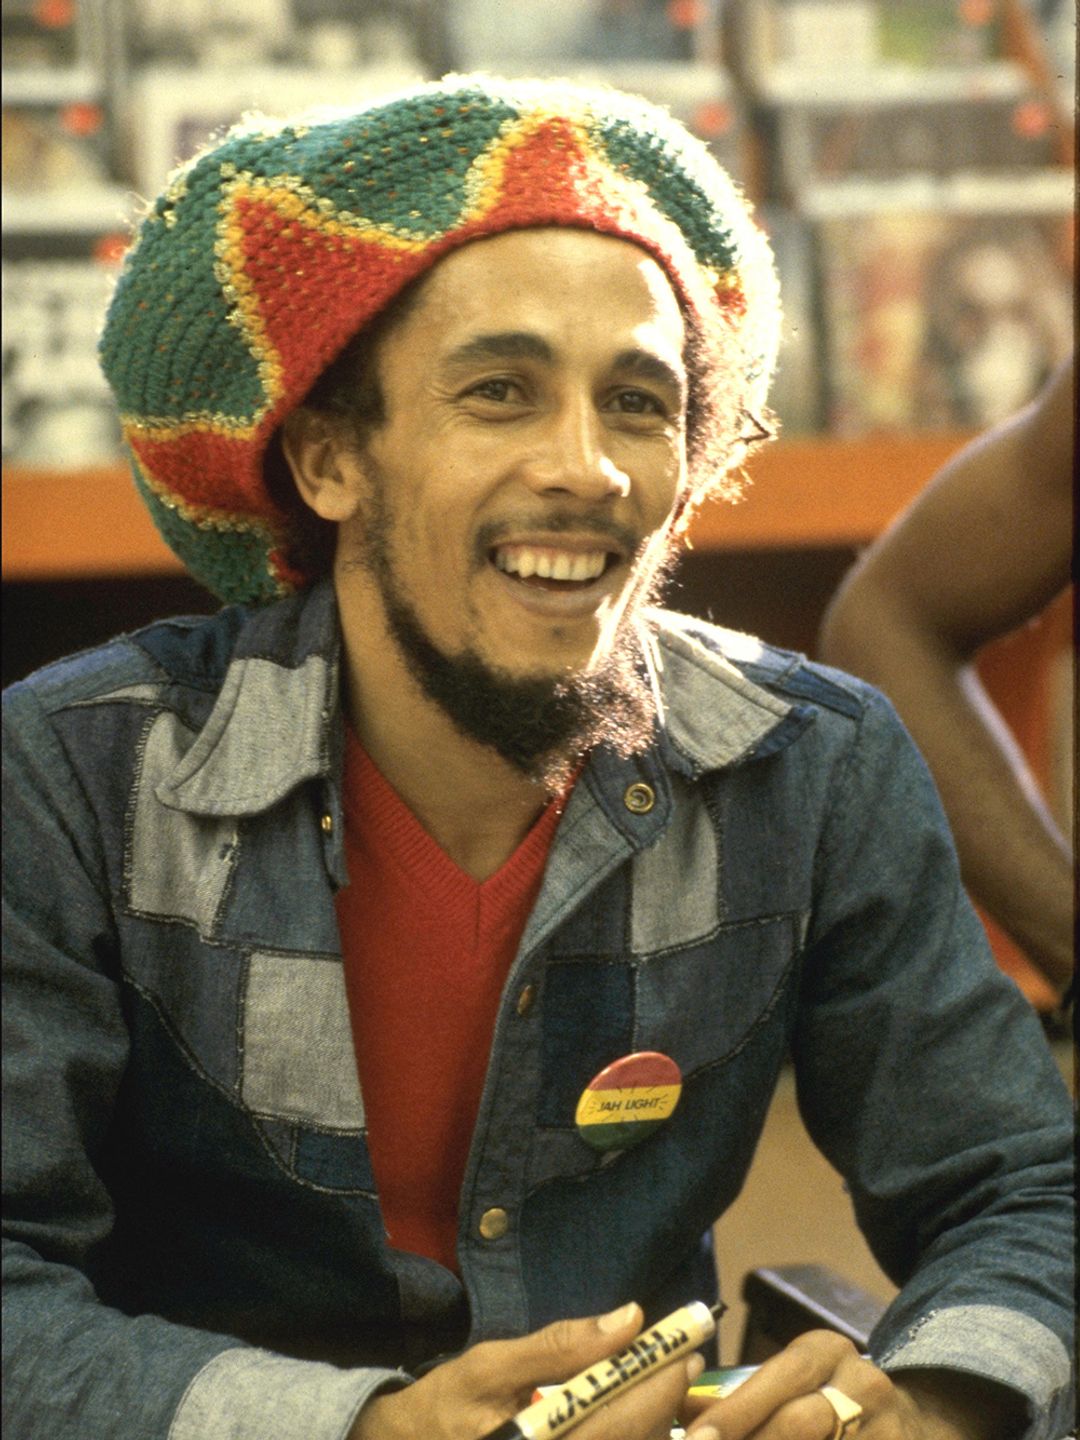 Bob Marley signing autographs